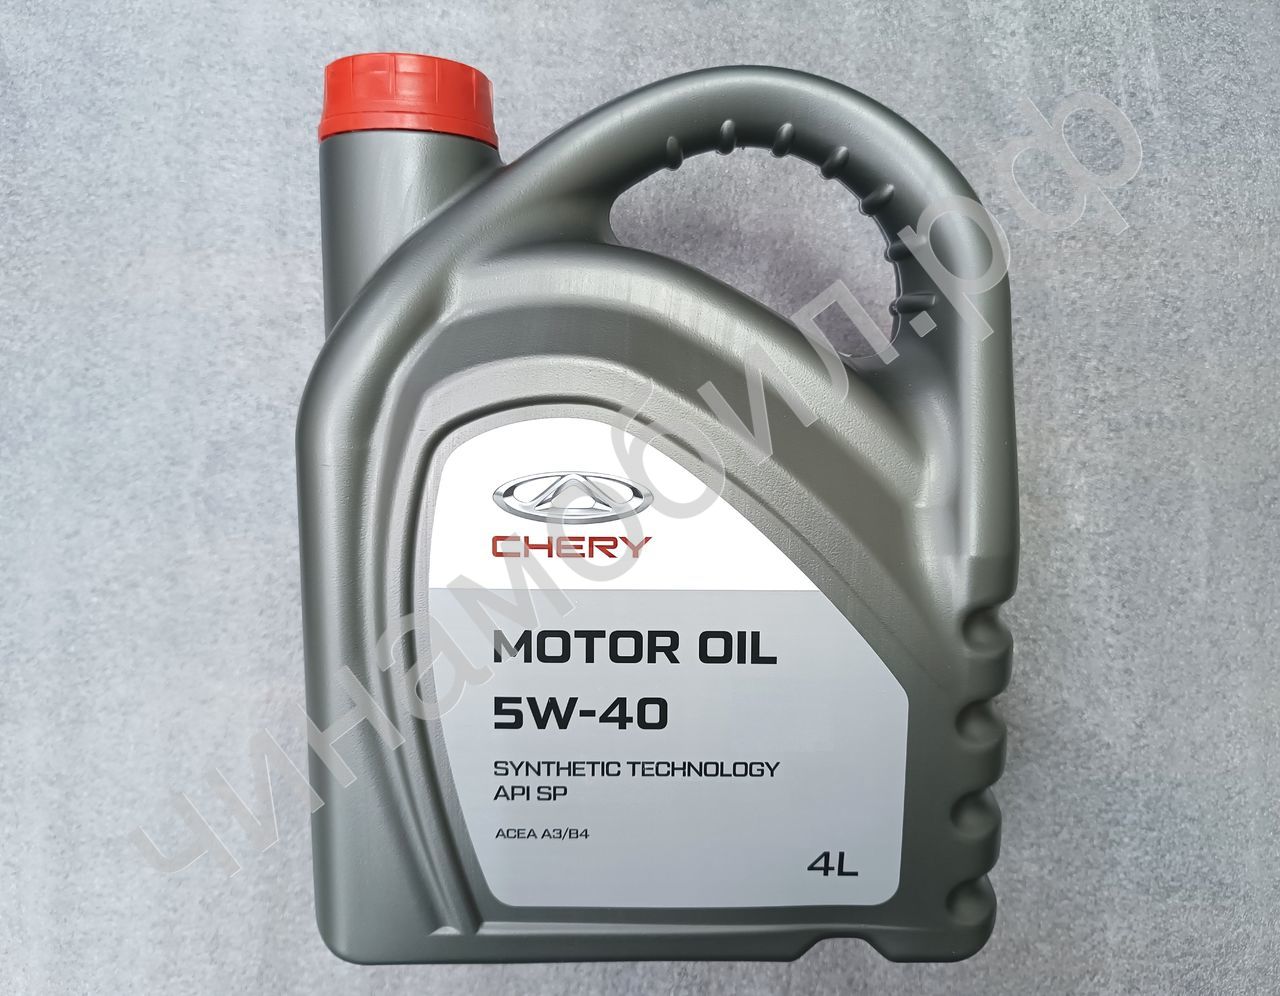 Tiggo 5 масло. Chery Motor Oil 5w40. Chery Oil 5w-40. Chery Motor Oil 5w-40 SN/CF. Масло Chery Motor Oil 5w-40.